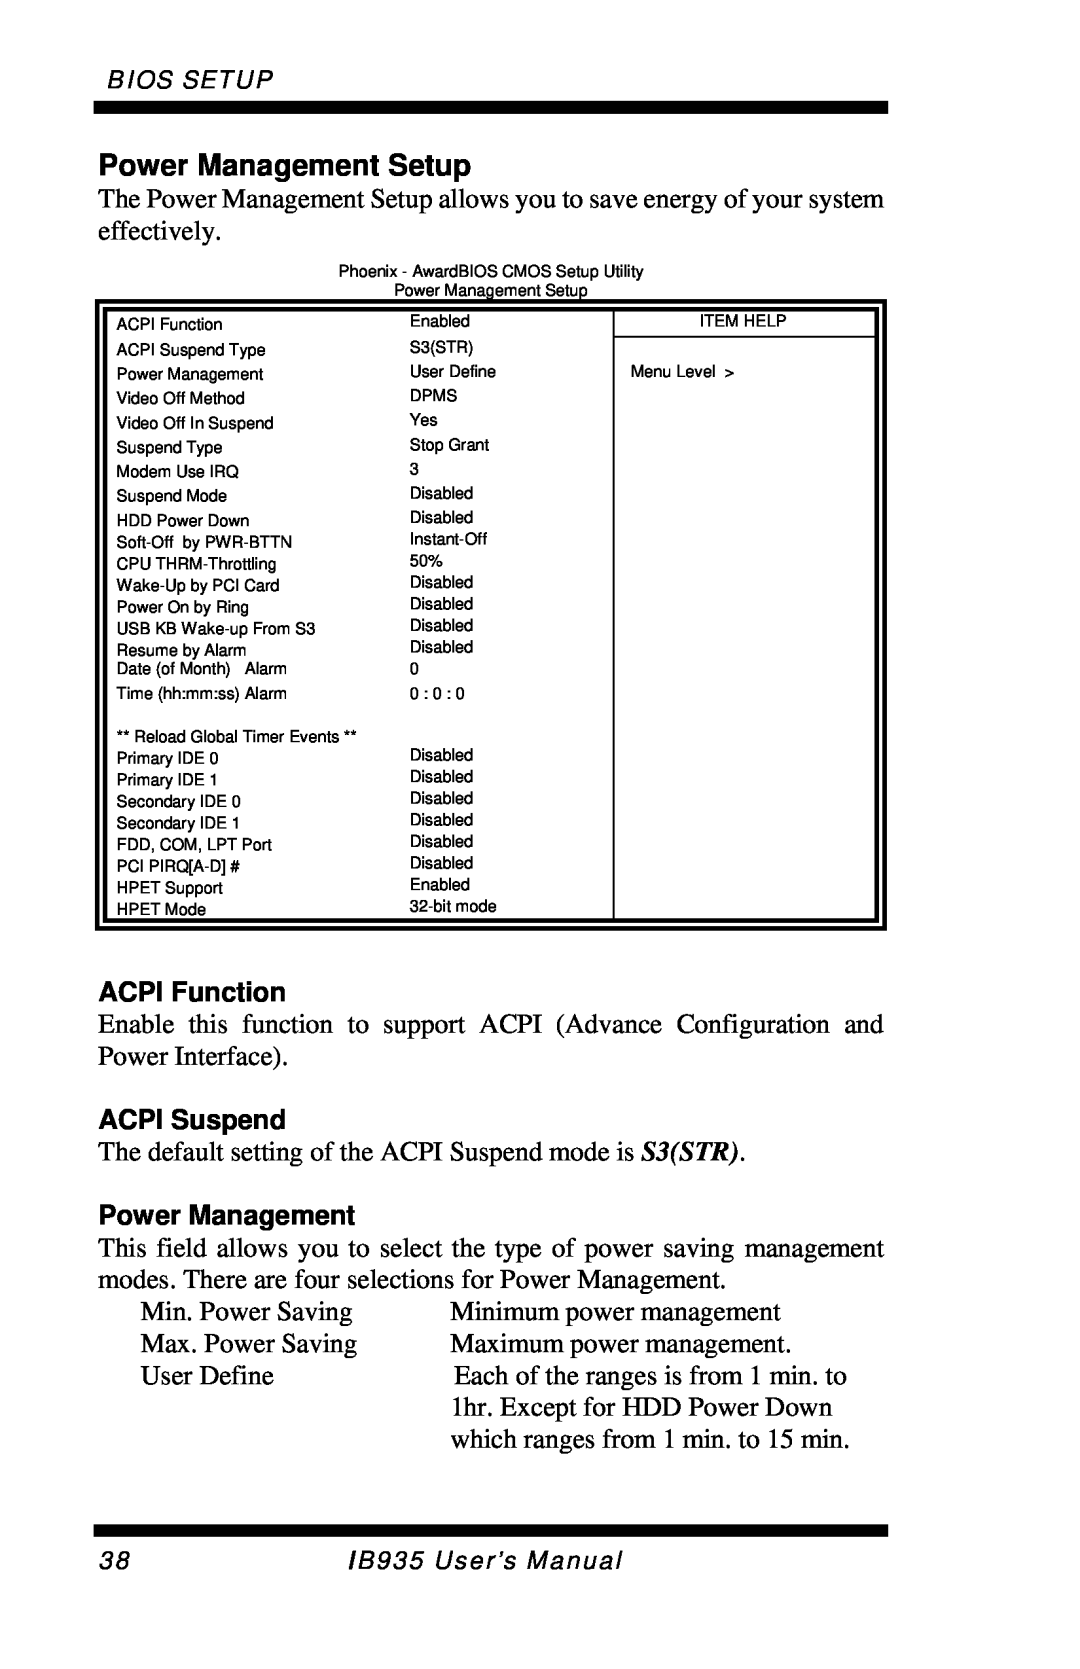 Intel IB935 user manual Power Management Setup, ACPI Function, ACPI Suspend 